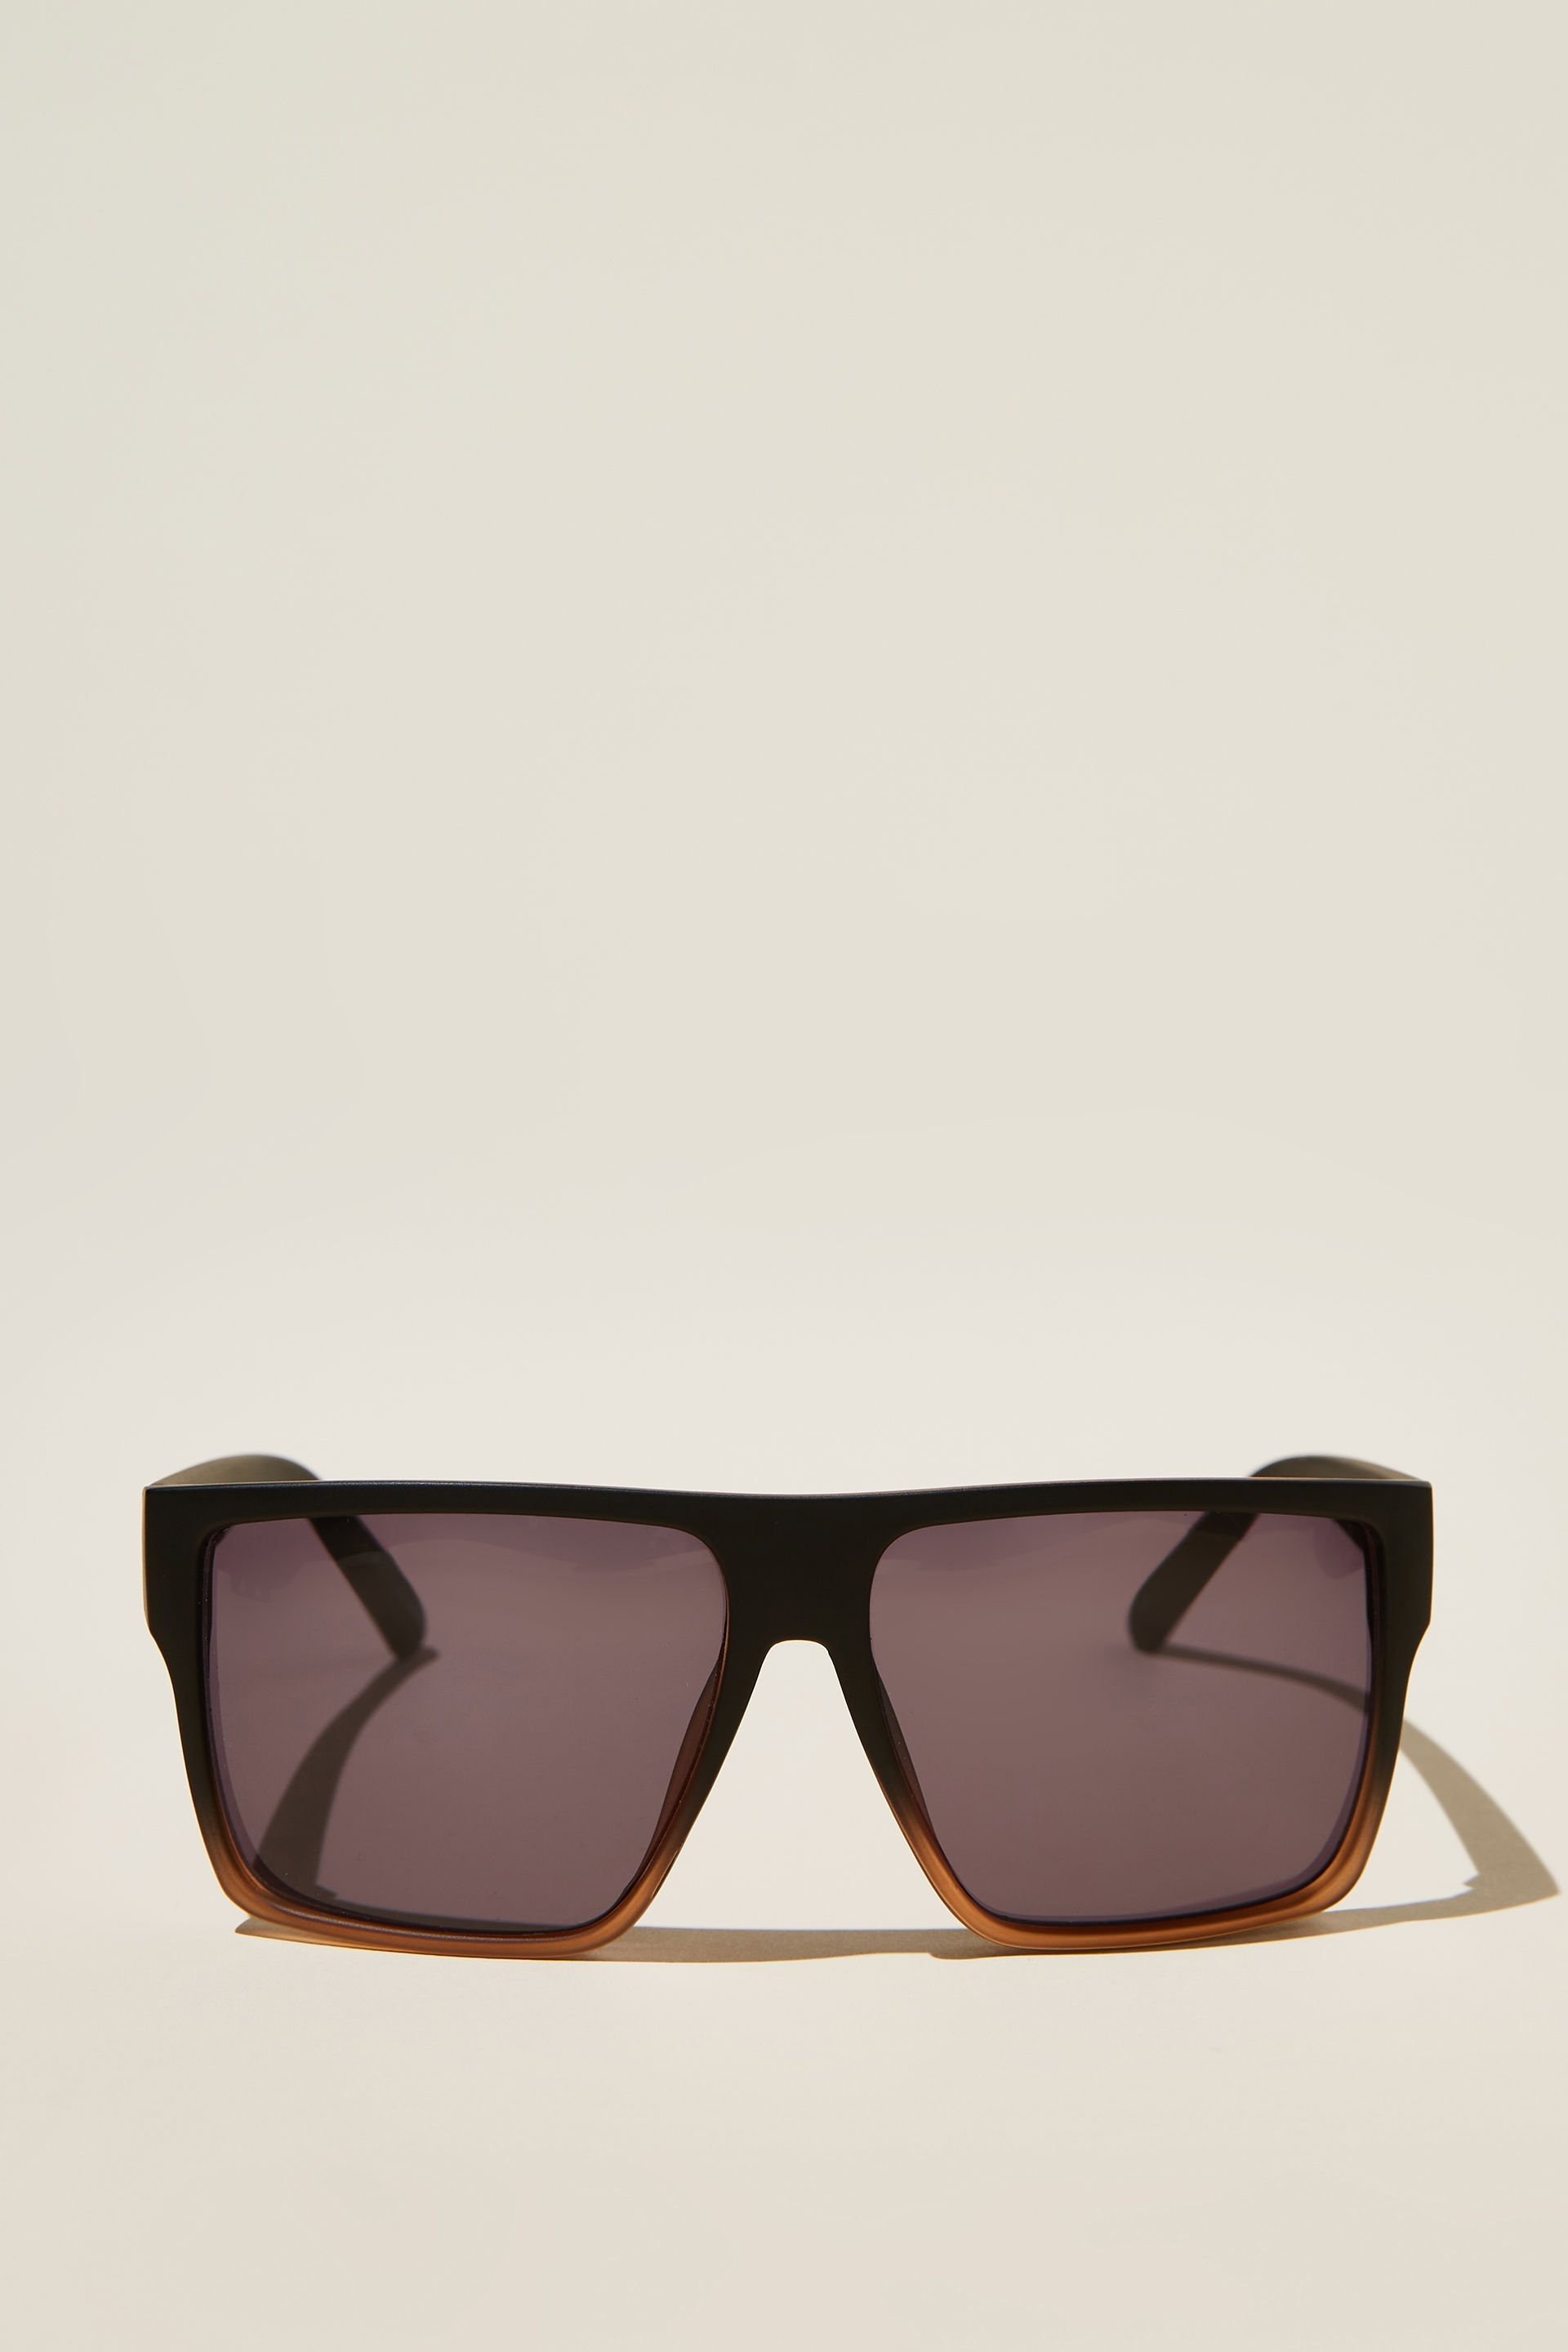 Cotton On Men - Adventure Cr39 Sunglasses - Matte black tort / brown